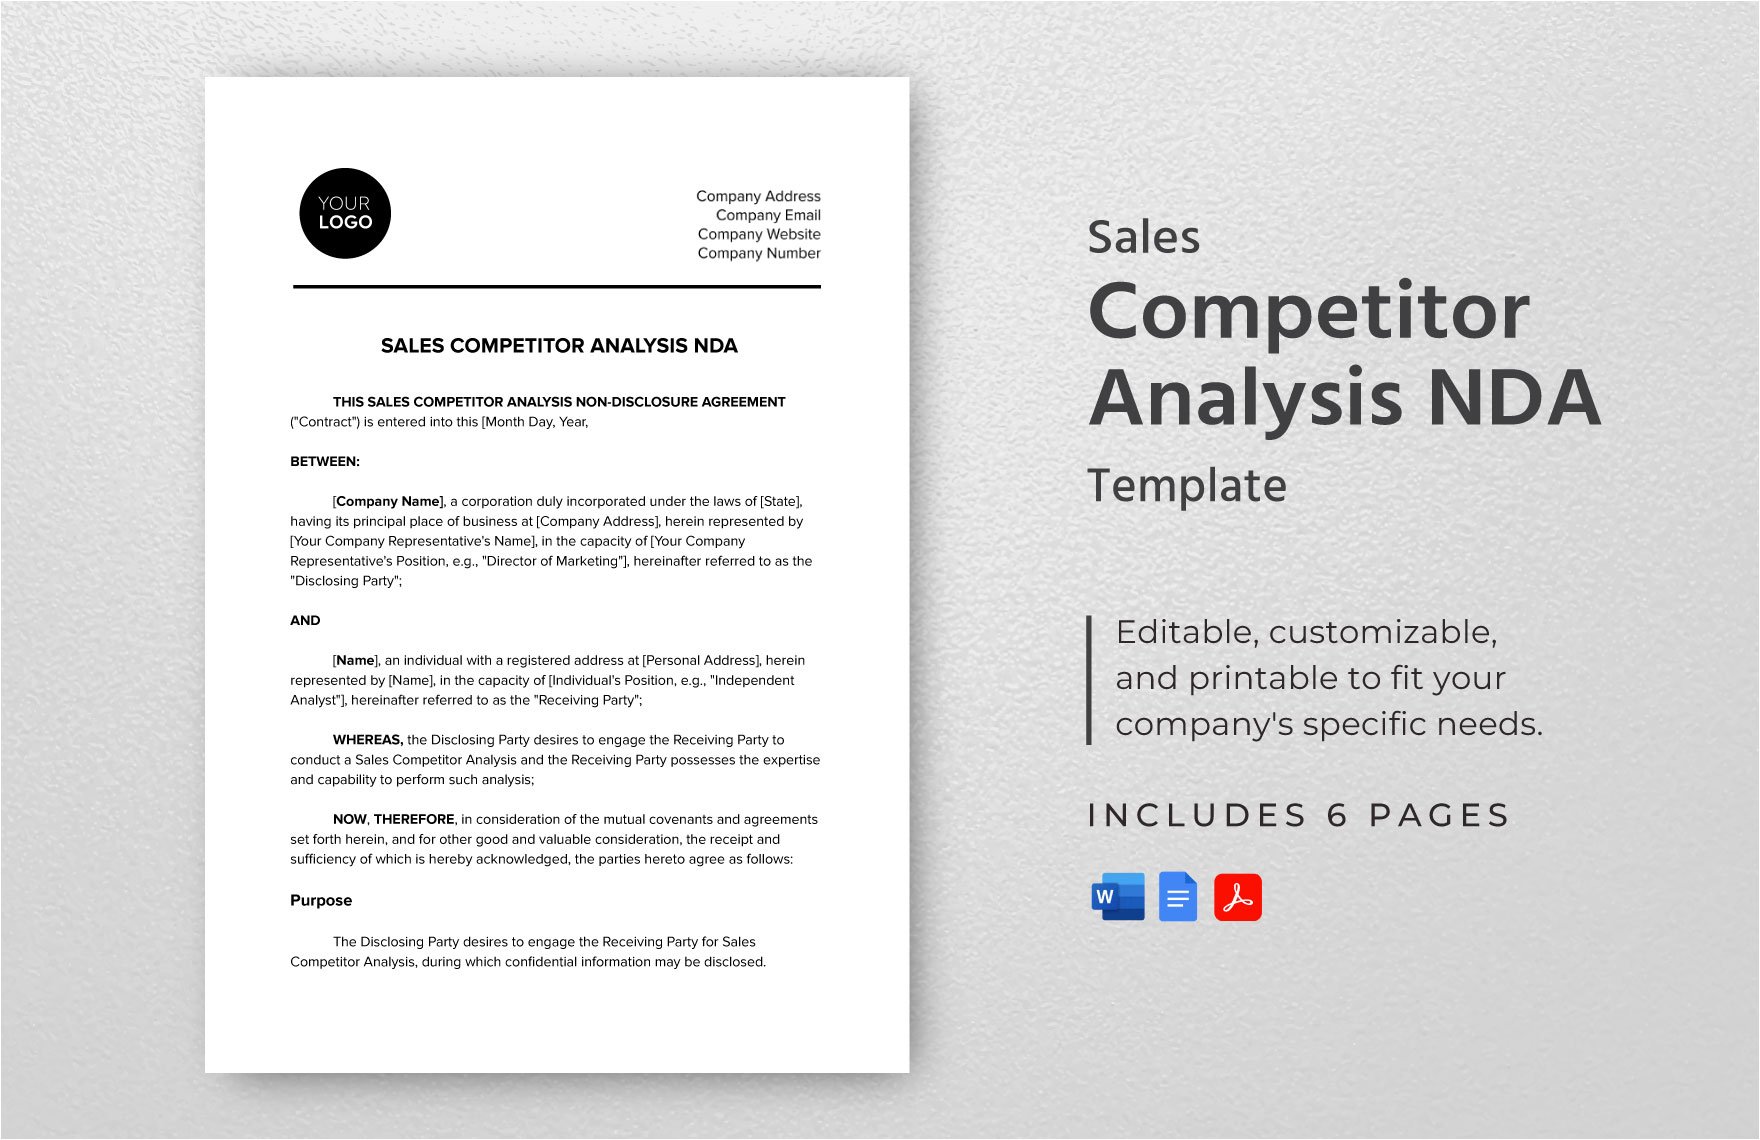 Sales Competitor Analysis NDA Template in Word, Google Docs, PDF